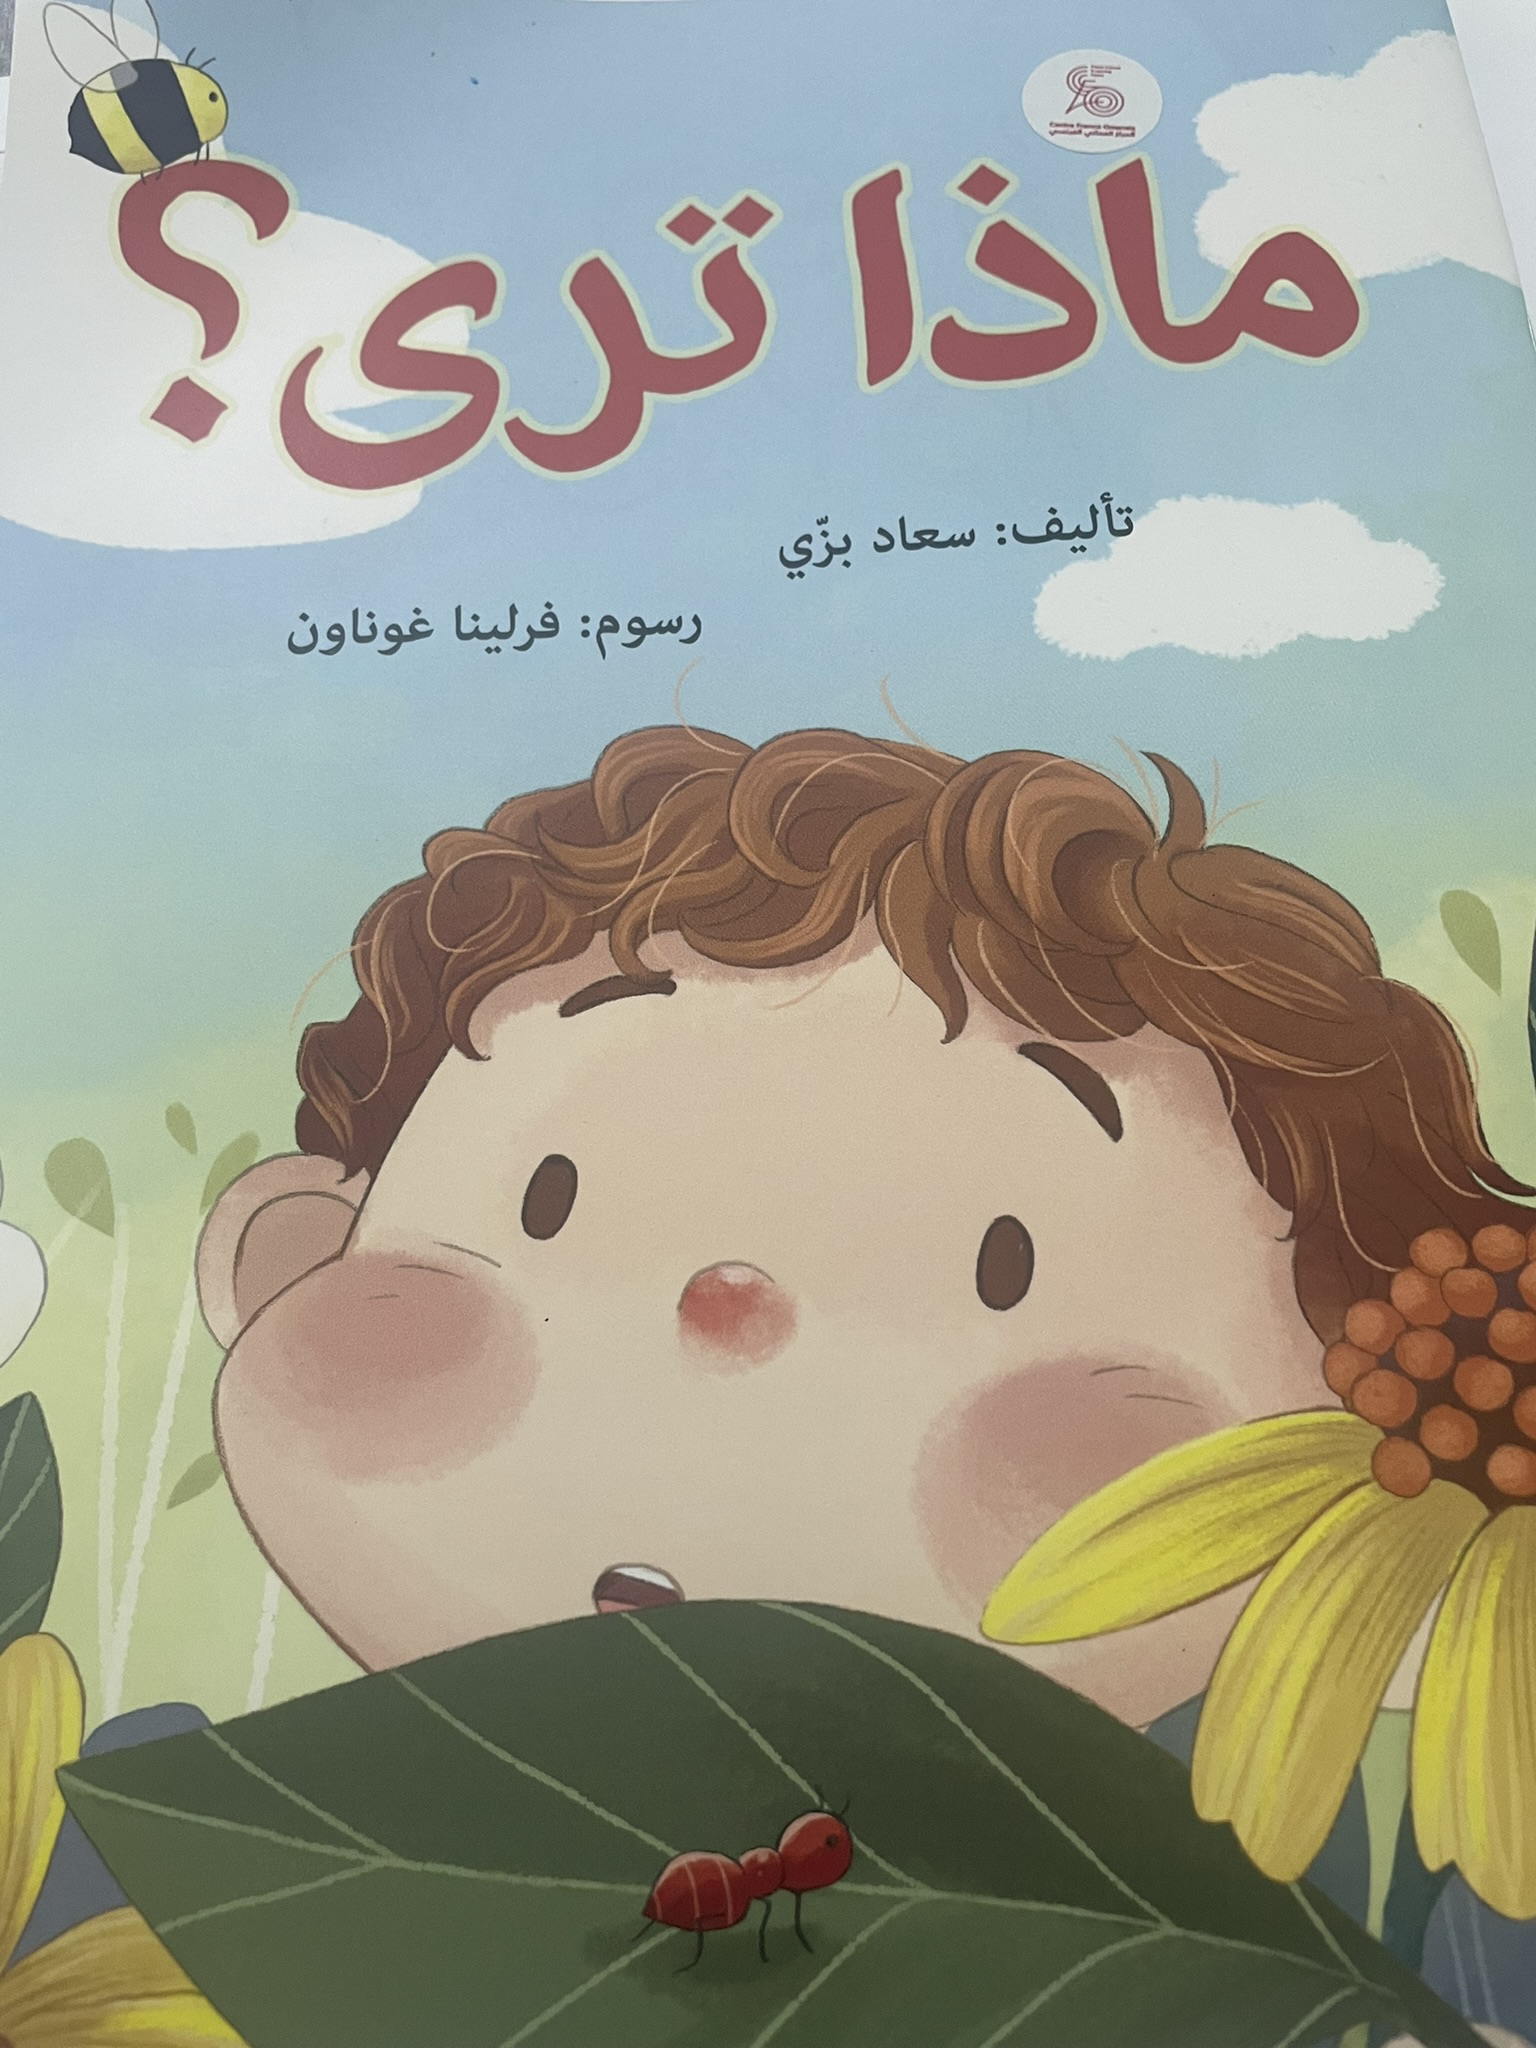 Arabic language day – Workshop for kids